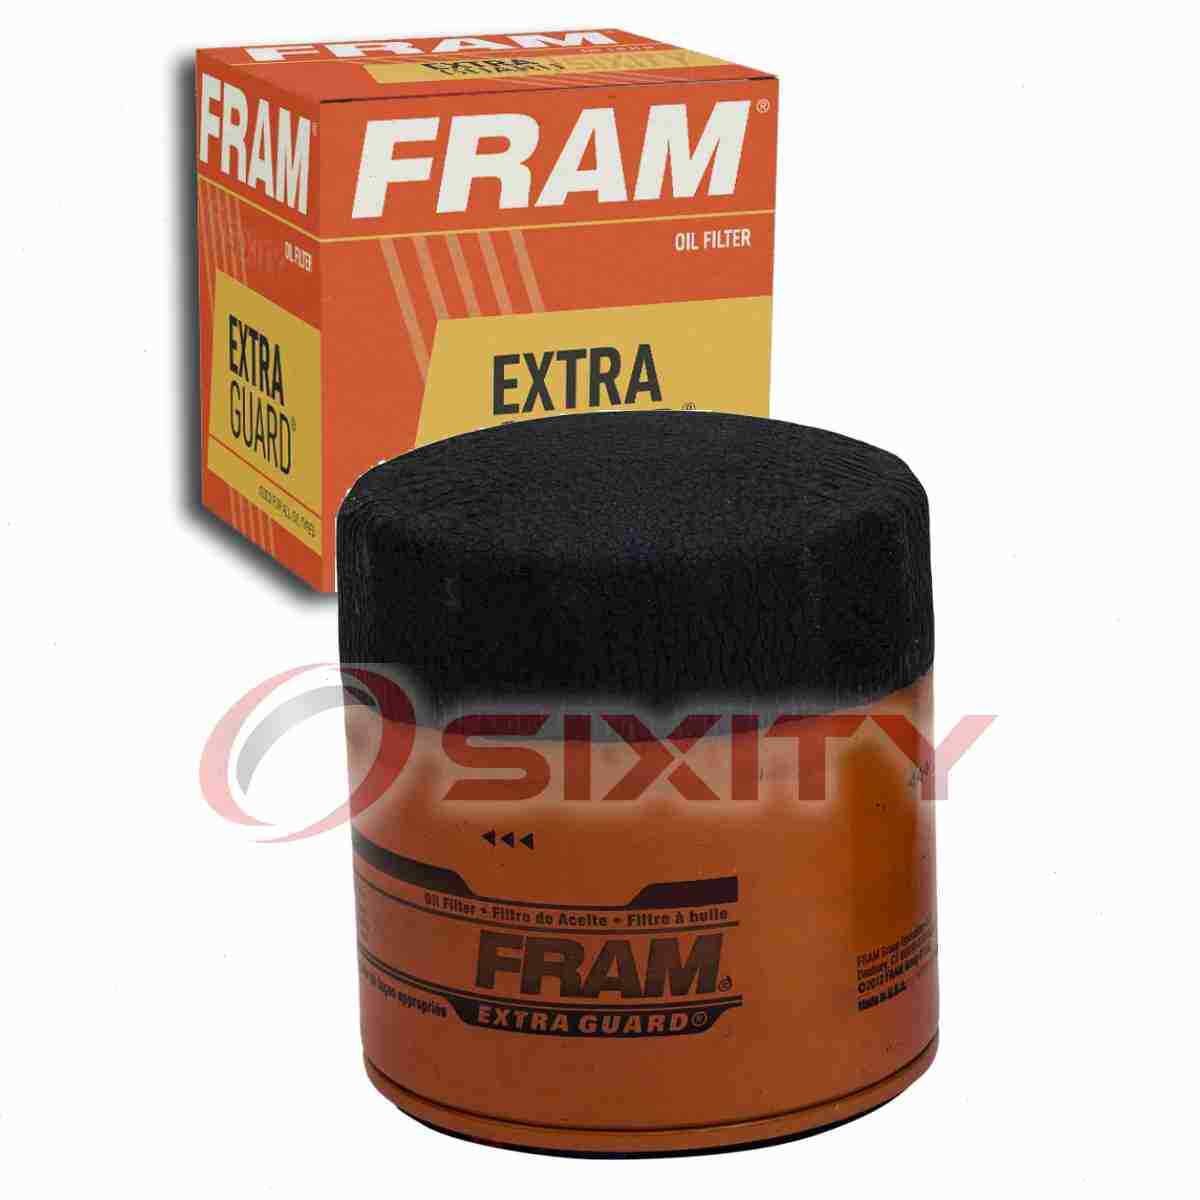 FRAM Extra Guard Engine Oil Filter for 1975-1987 Oldsmobile Cutlass Supreme ov